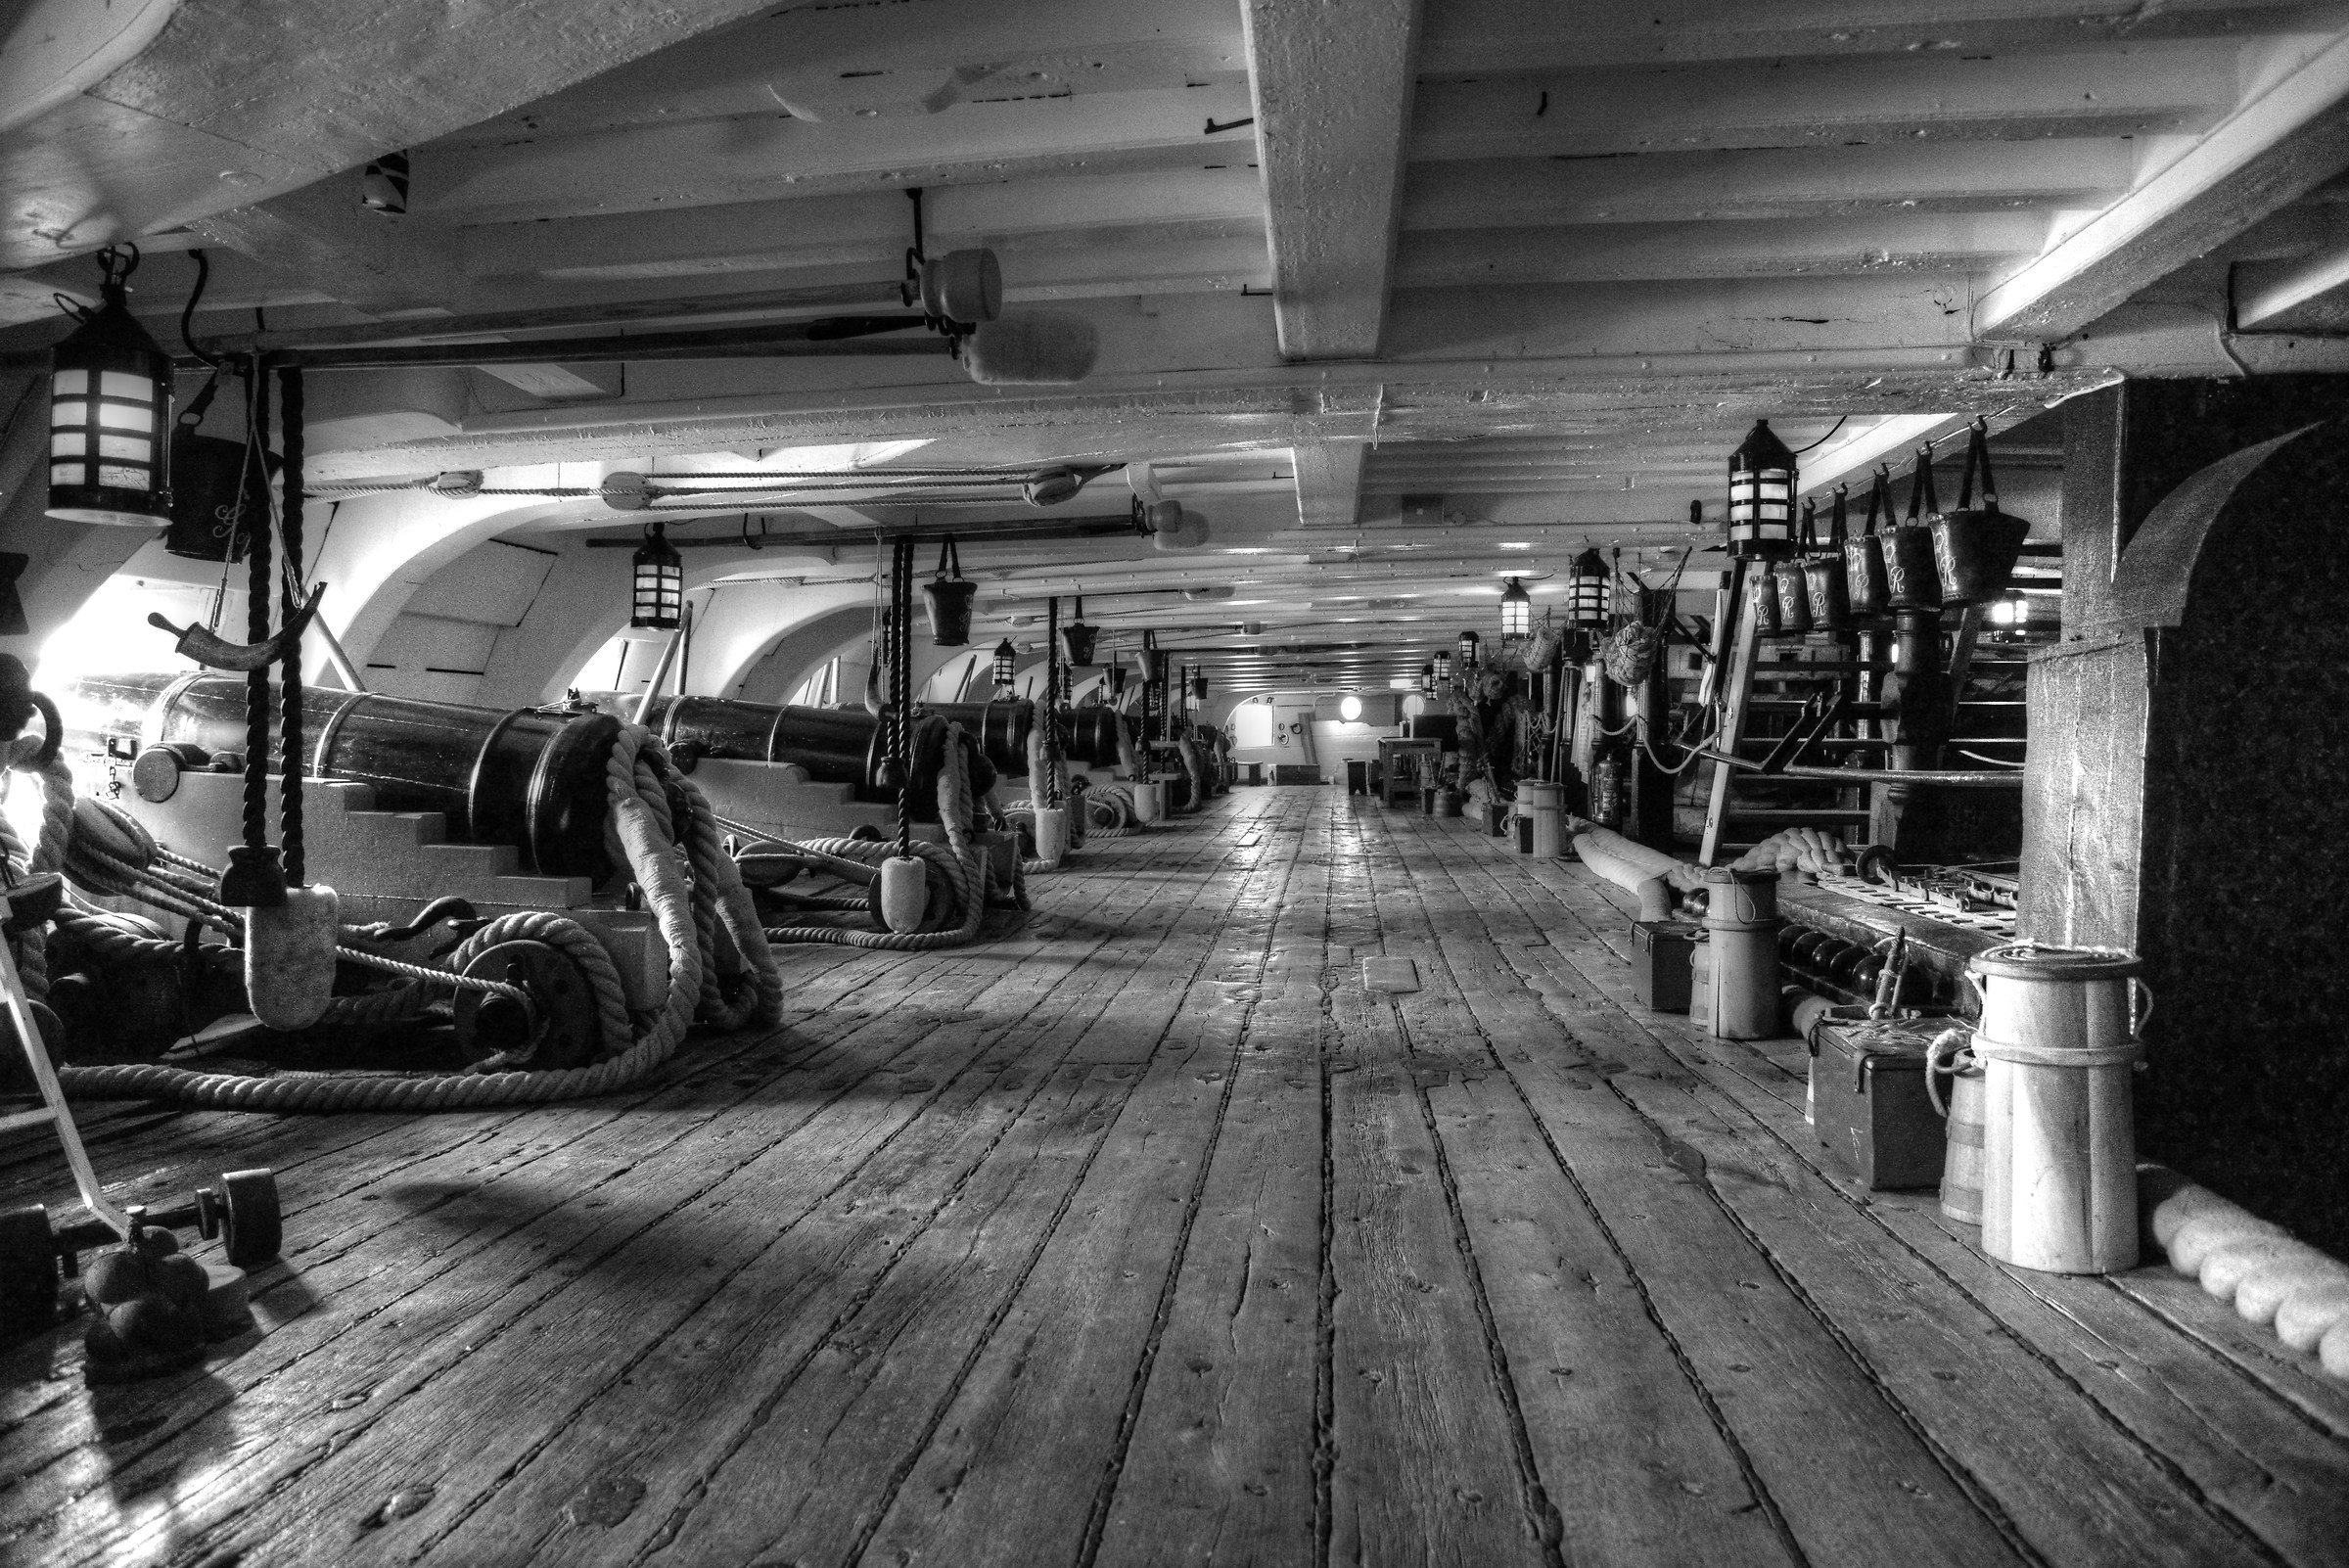 HMS Victory...